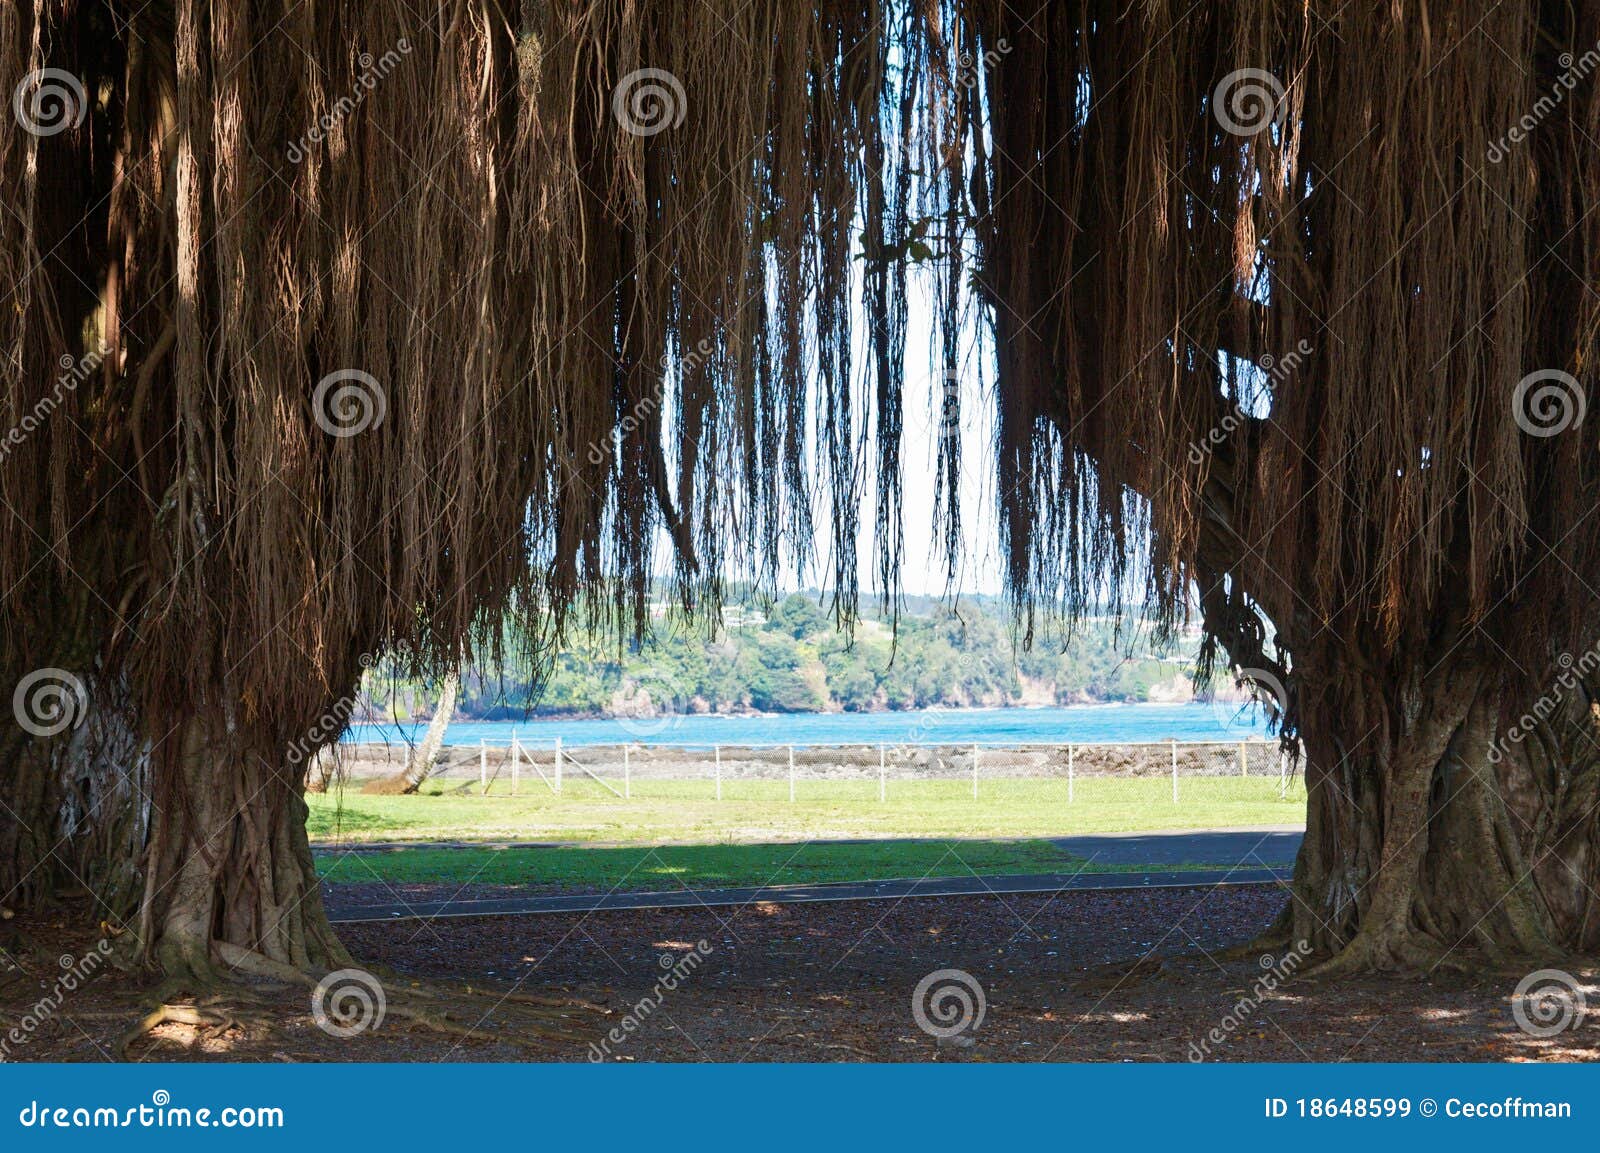 banyan trees of hilo